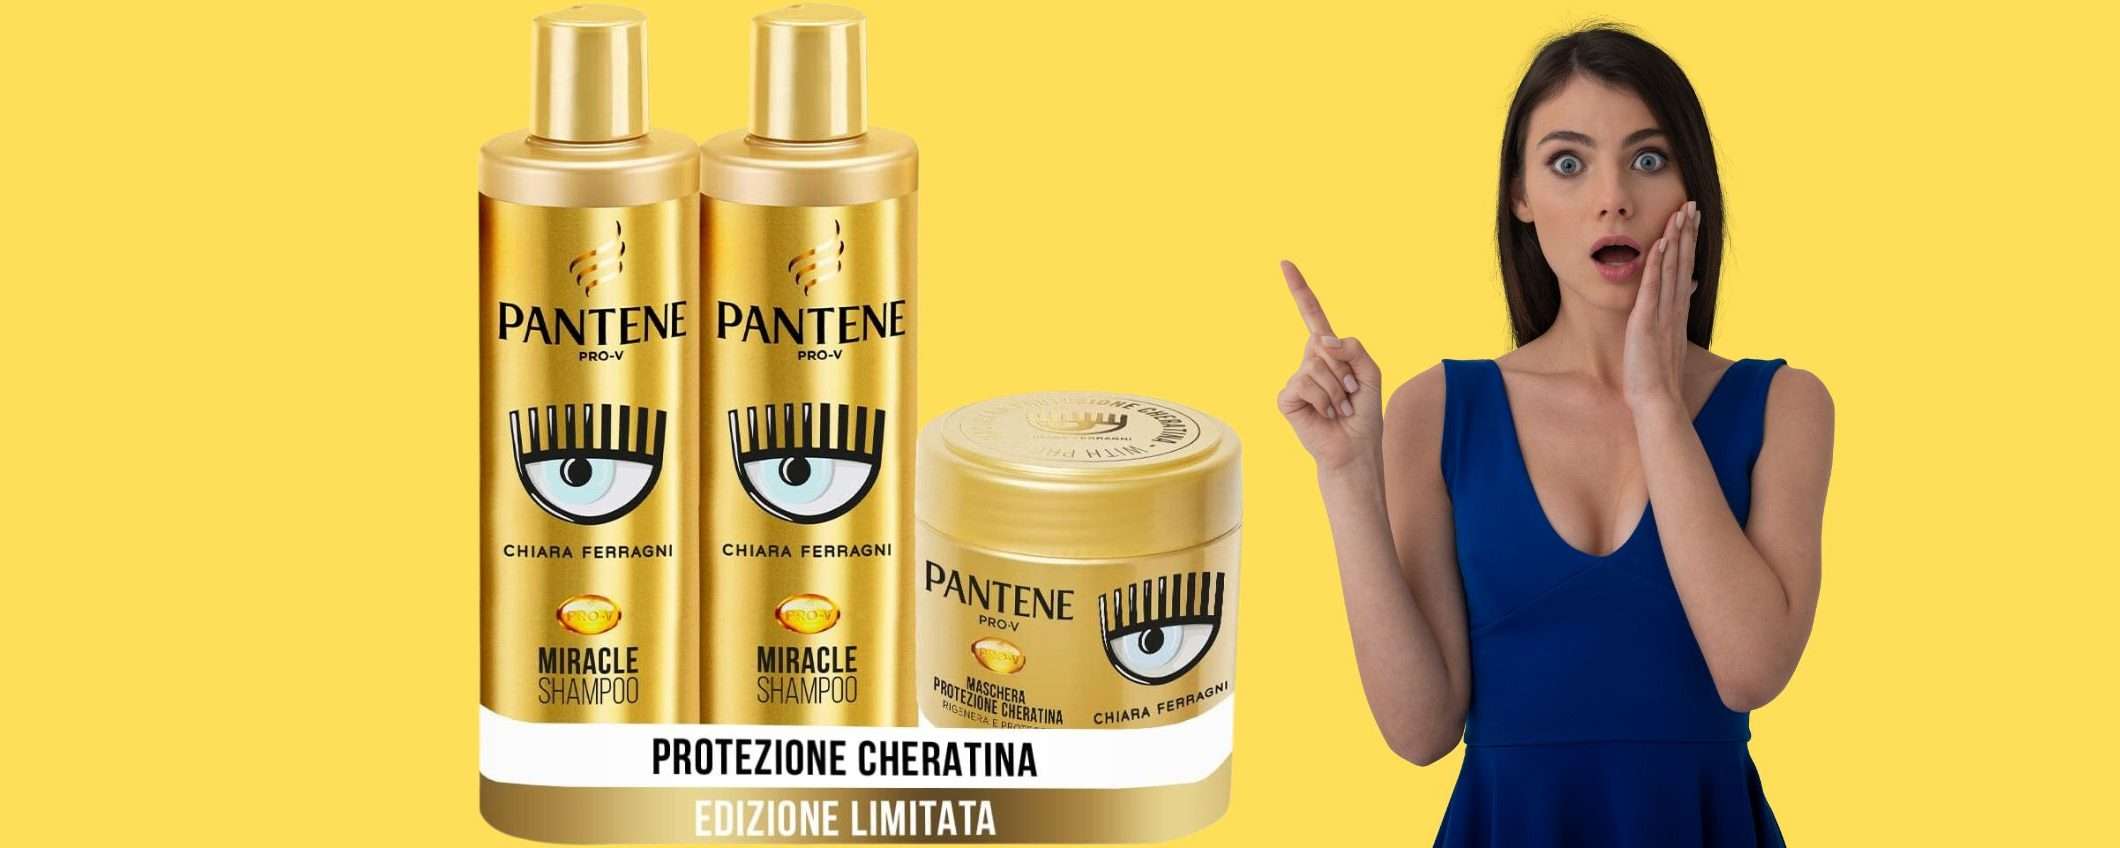 Pantene Pro-V by Chiara Ferragni Miracle Shampoo a soli €8,75: offerta incredibile Amazon